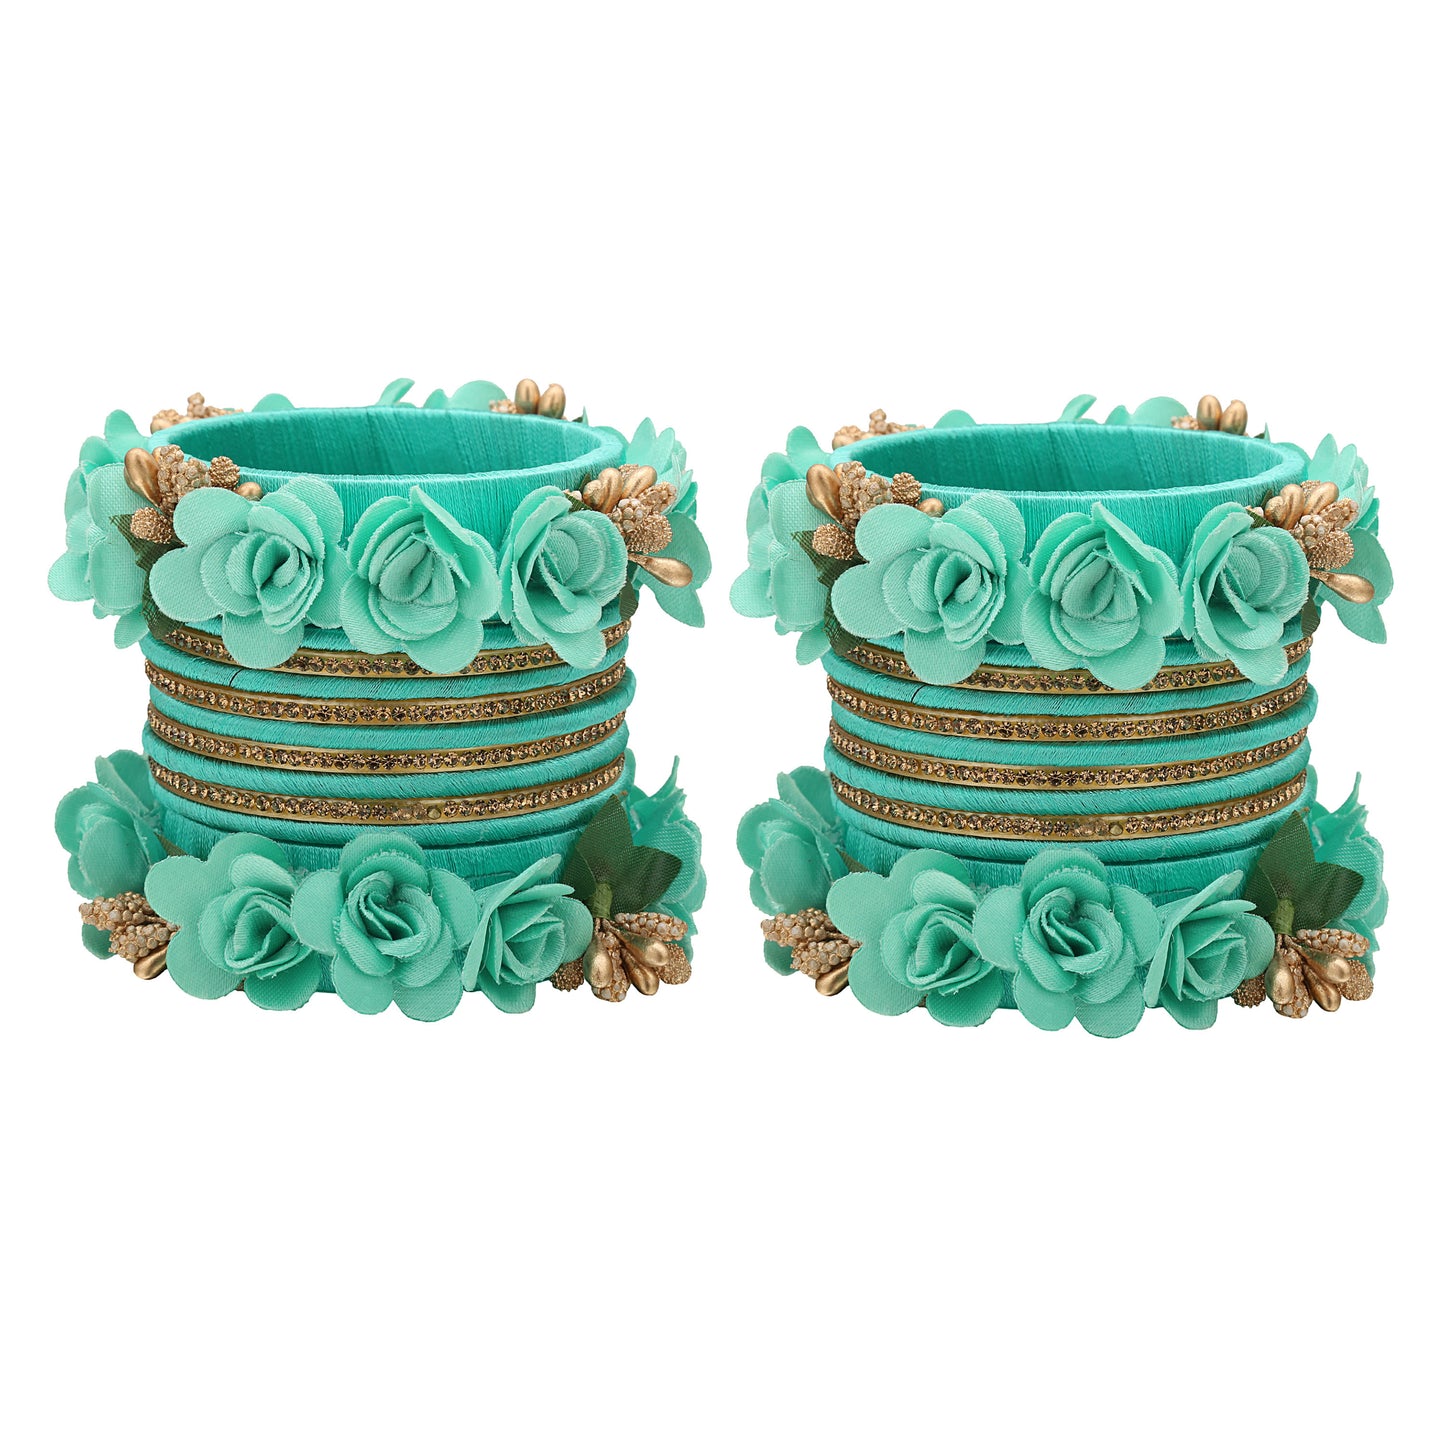 sukriti beautiful handcrafted turquoise flower designer silk thread bridal chuda wedding bangles for women – set of 22